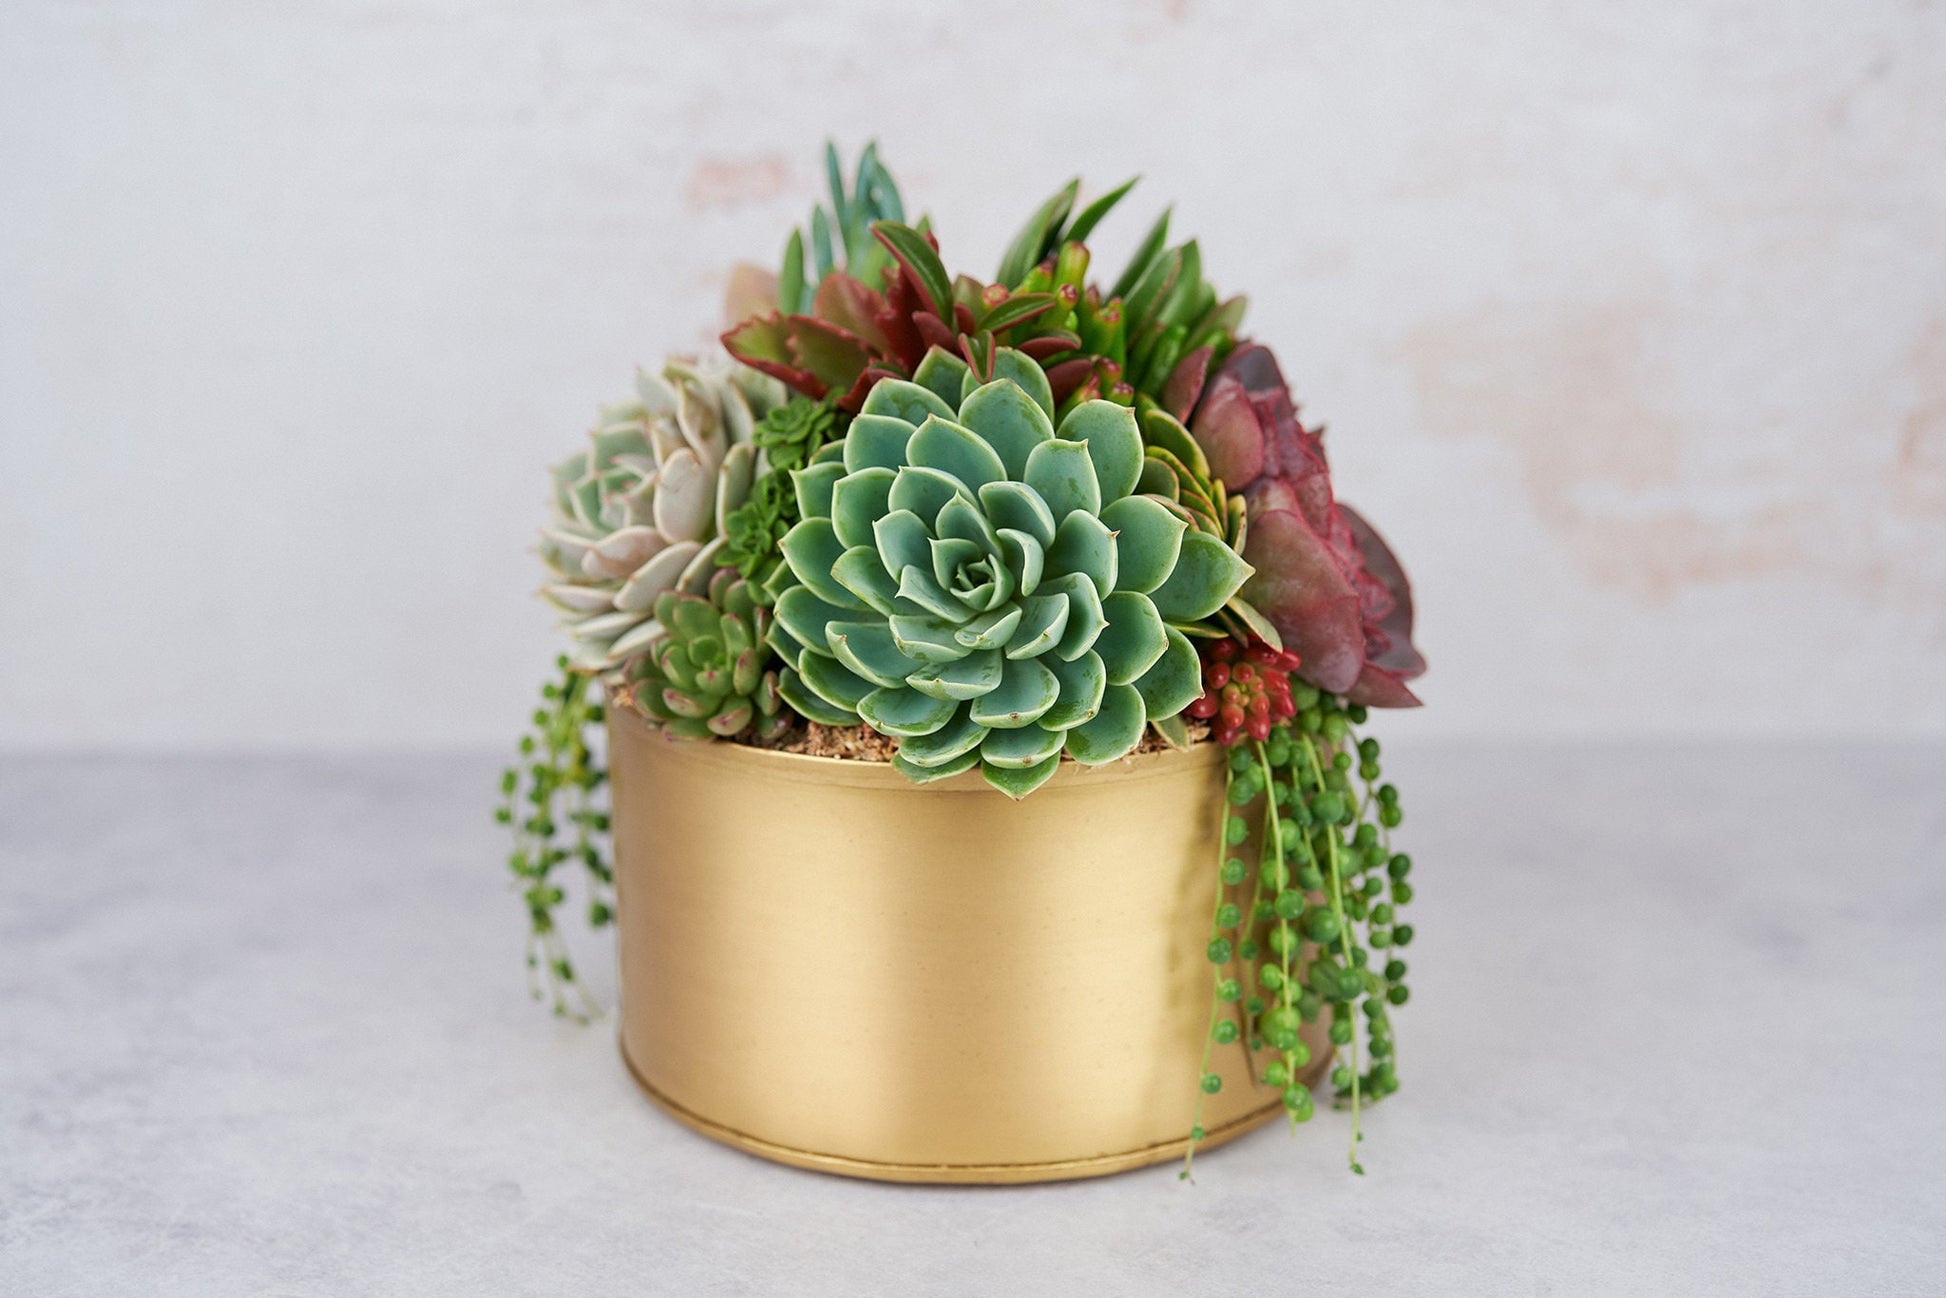 Gold Metal Bowl Succulent Arrangement Planter: Modern Living Succulent Gift, Centerpiece for Weddings & Events, Housewarming Gift